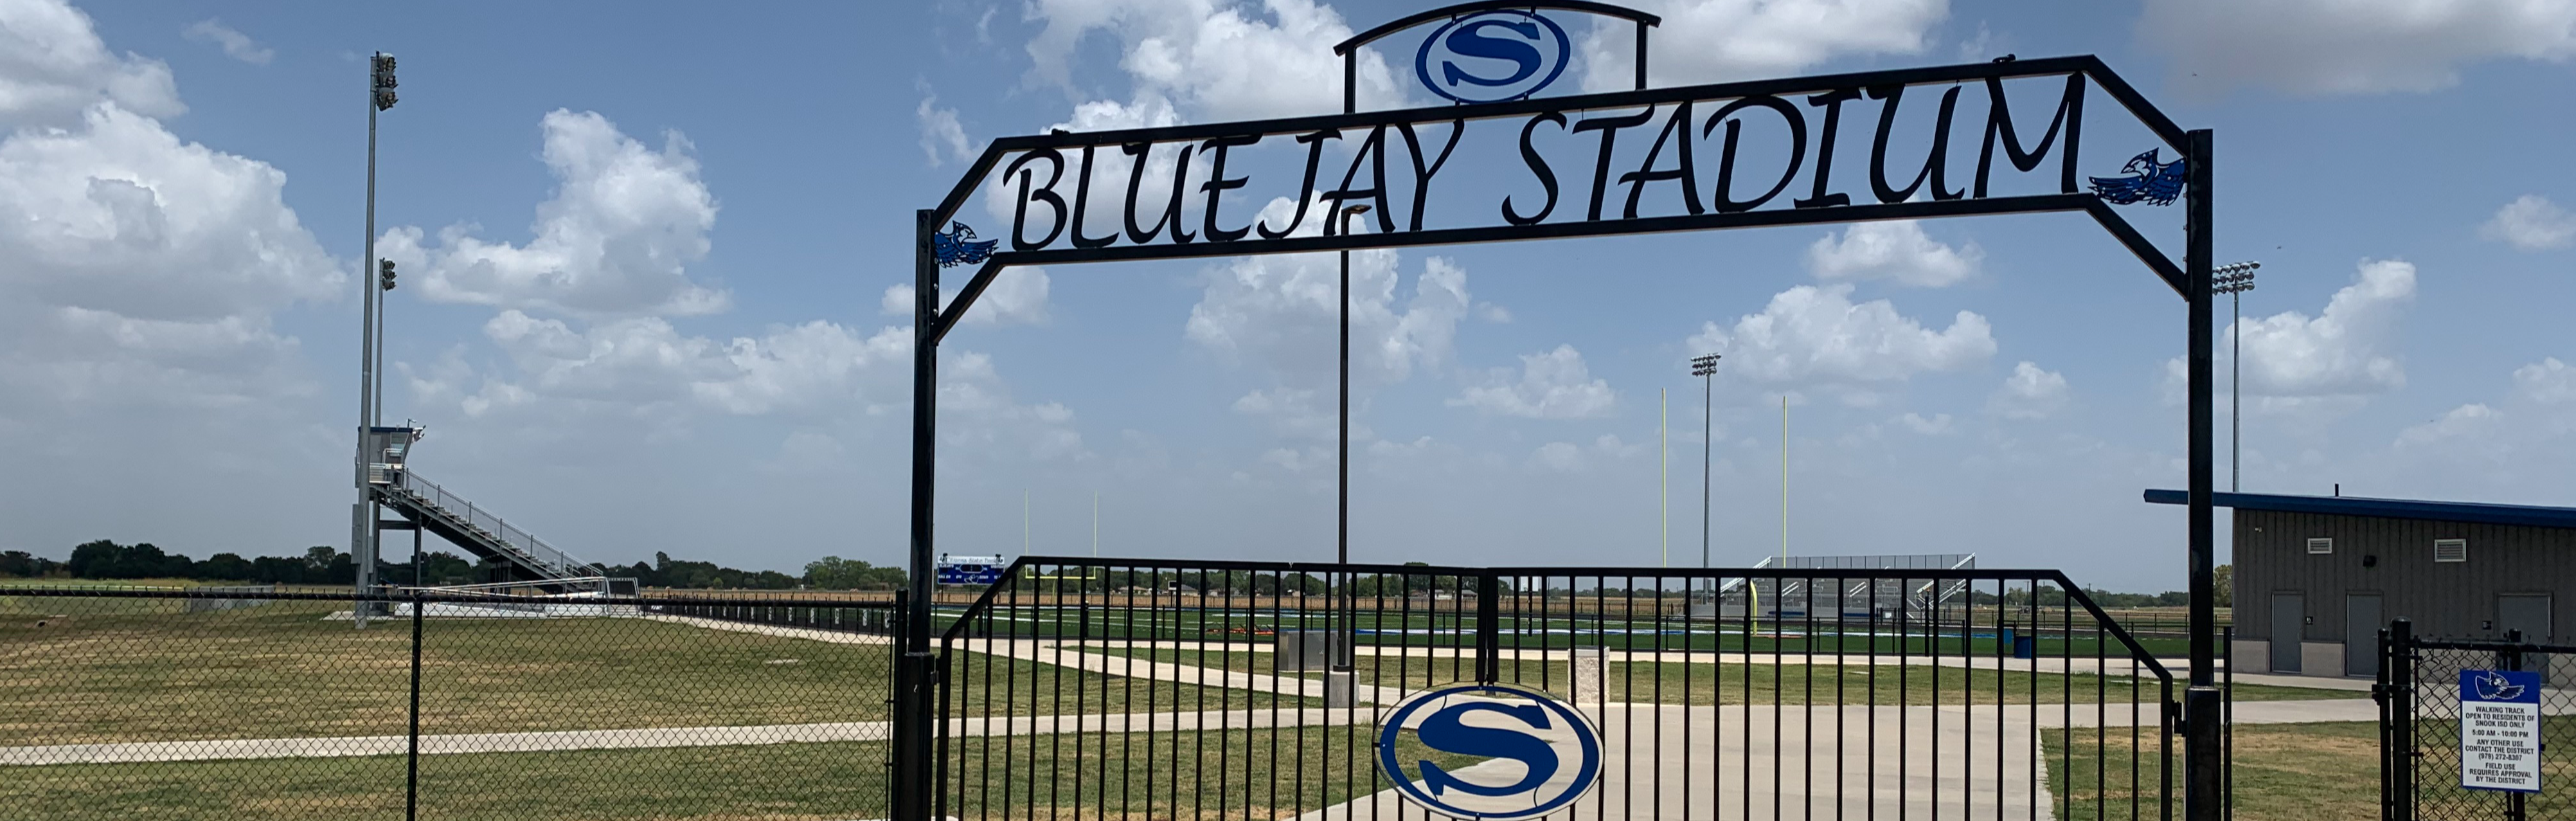 Bluejay stadium entrance